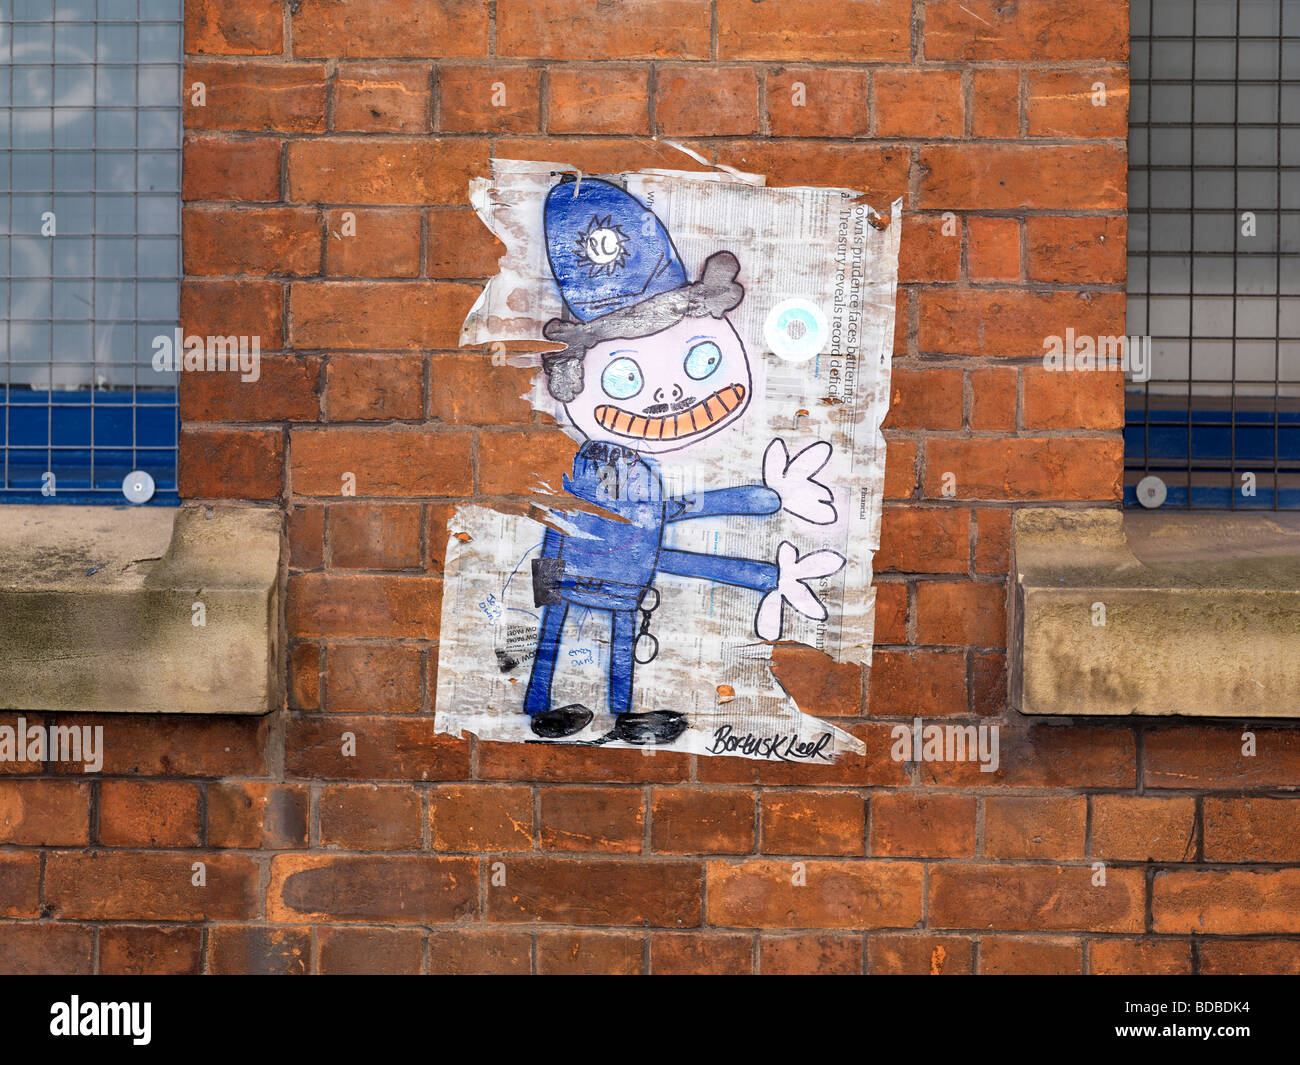 bortusk leer policeman graffiti manchester Stock Photo